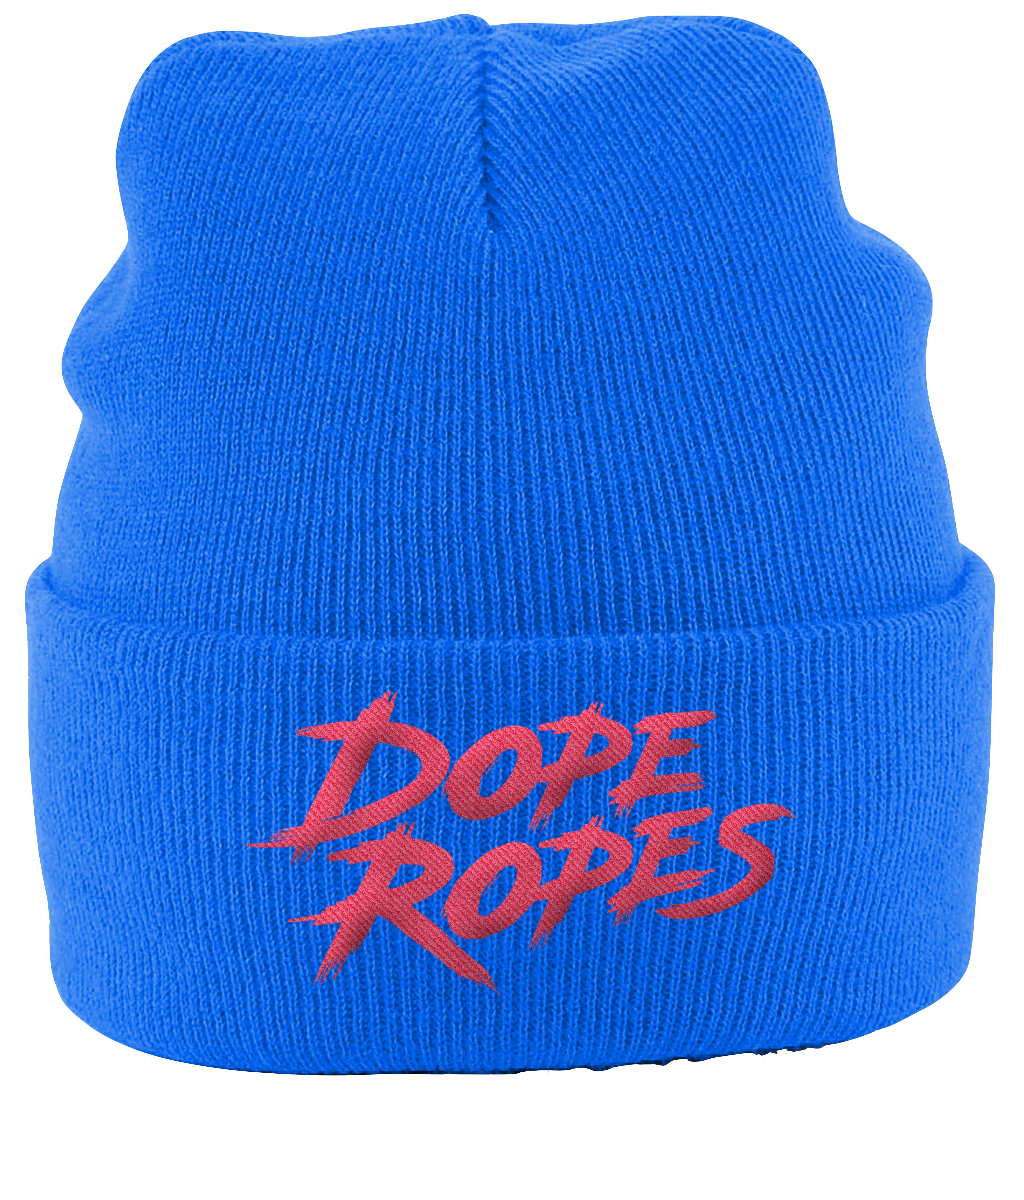 Dope Ropes Beanie